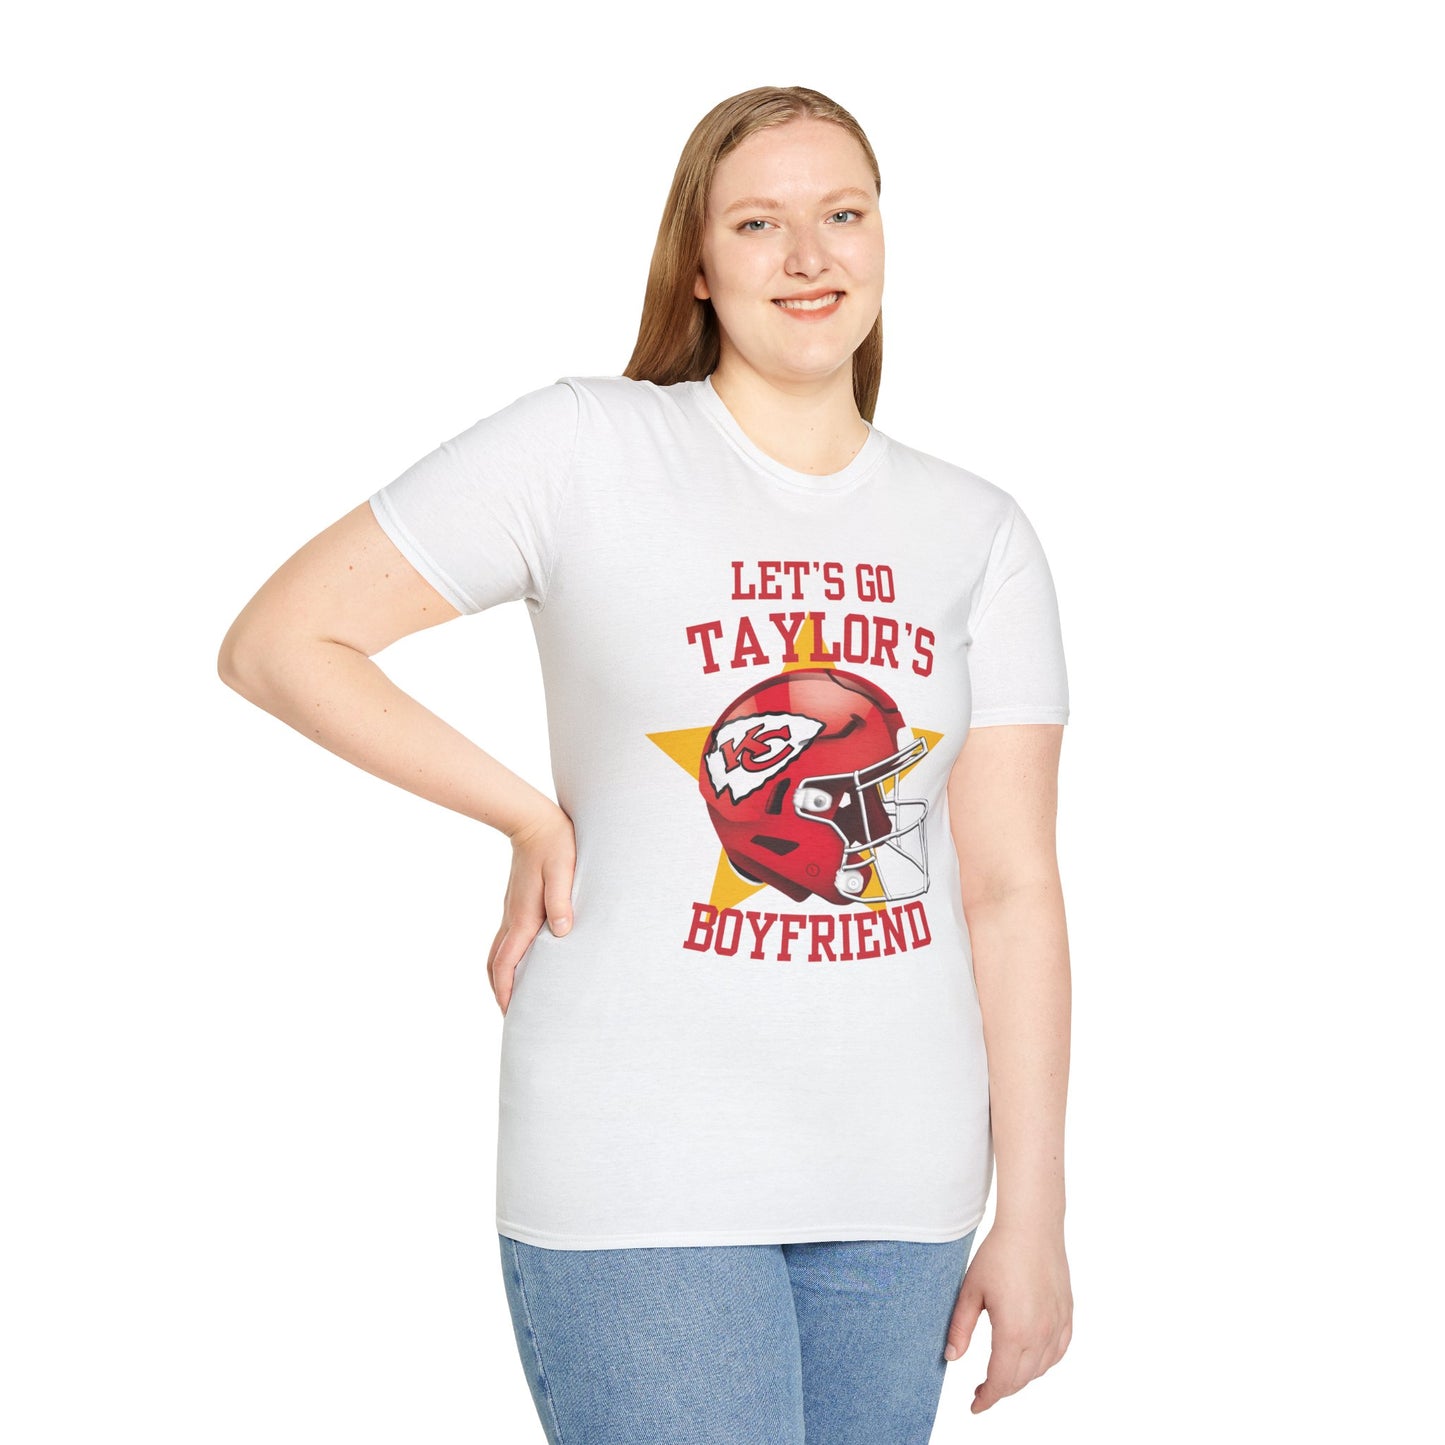 Lets Go Taylors Boyfriend - Unisex Softstyle T-Shirt